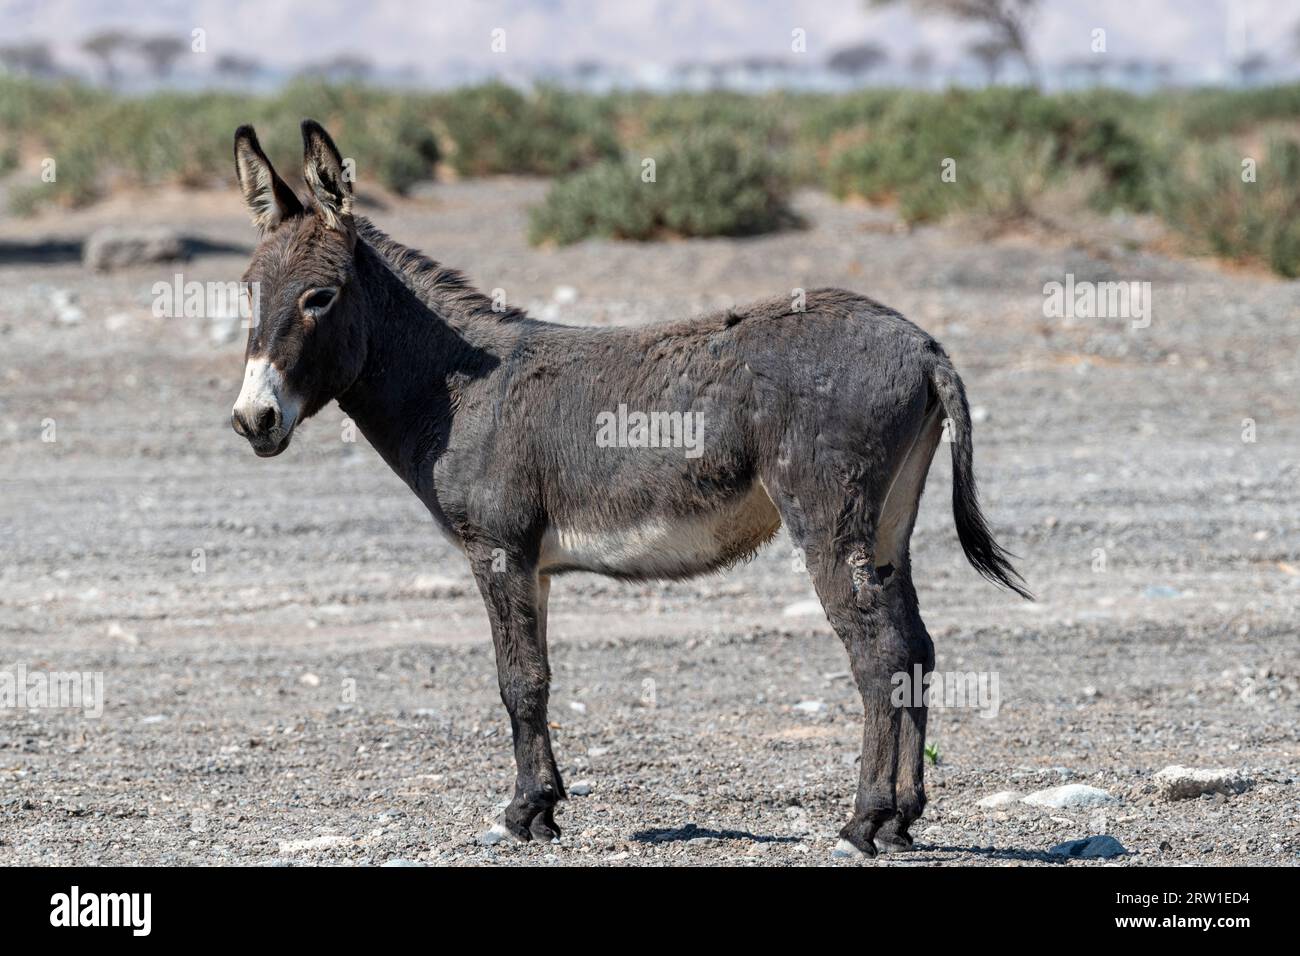 Wild donkey in the desert of Sharjah Emirates, United Arab Emirates. Stock Photo